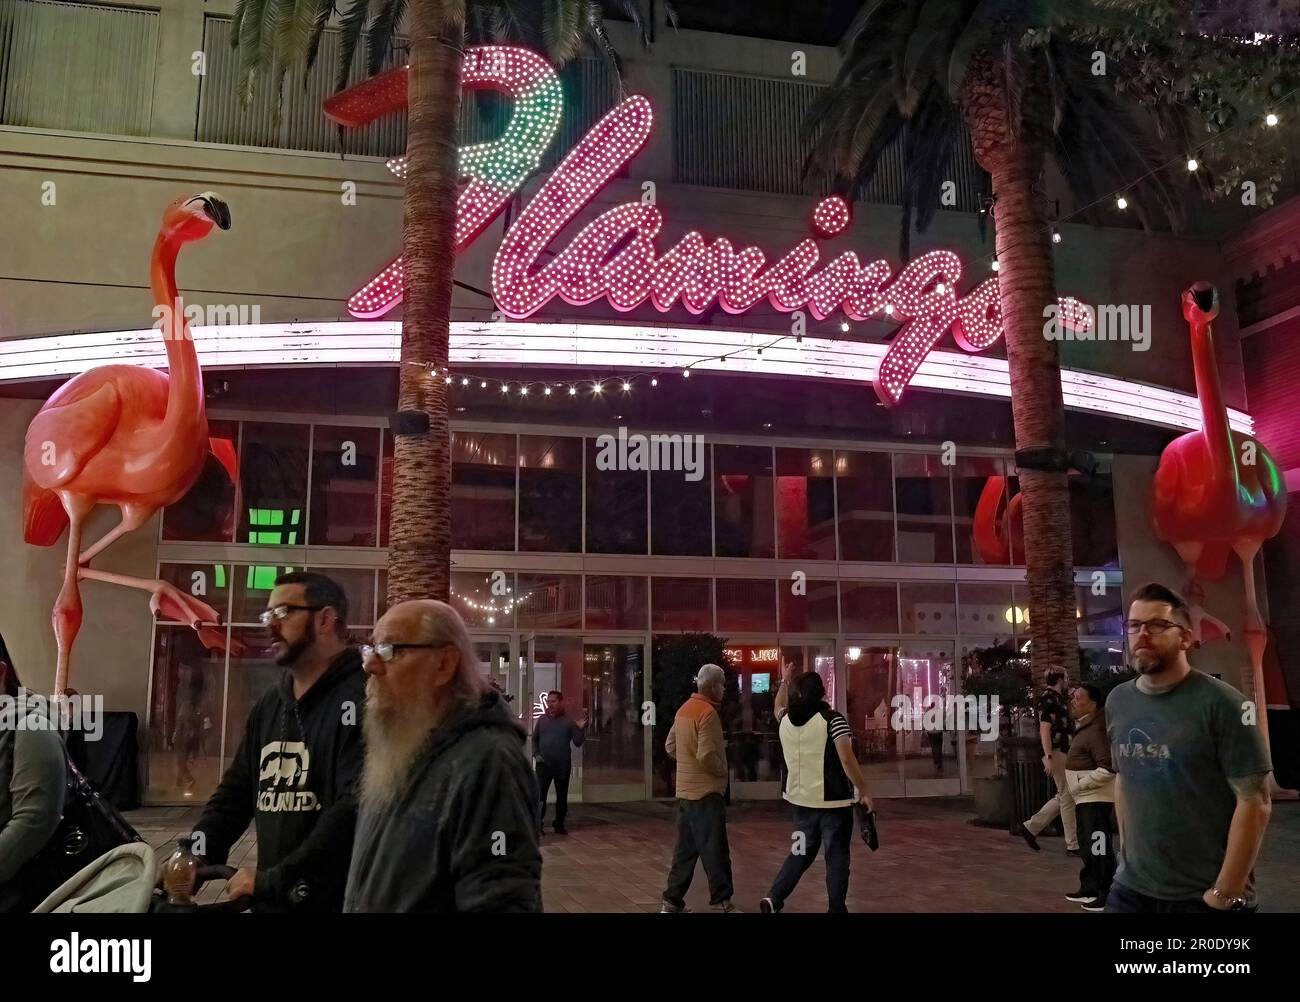 Flamingo Las Vegas Hotel, Book Now